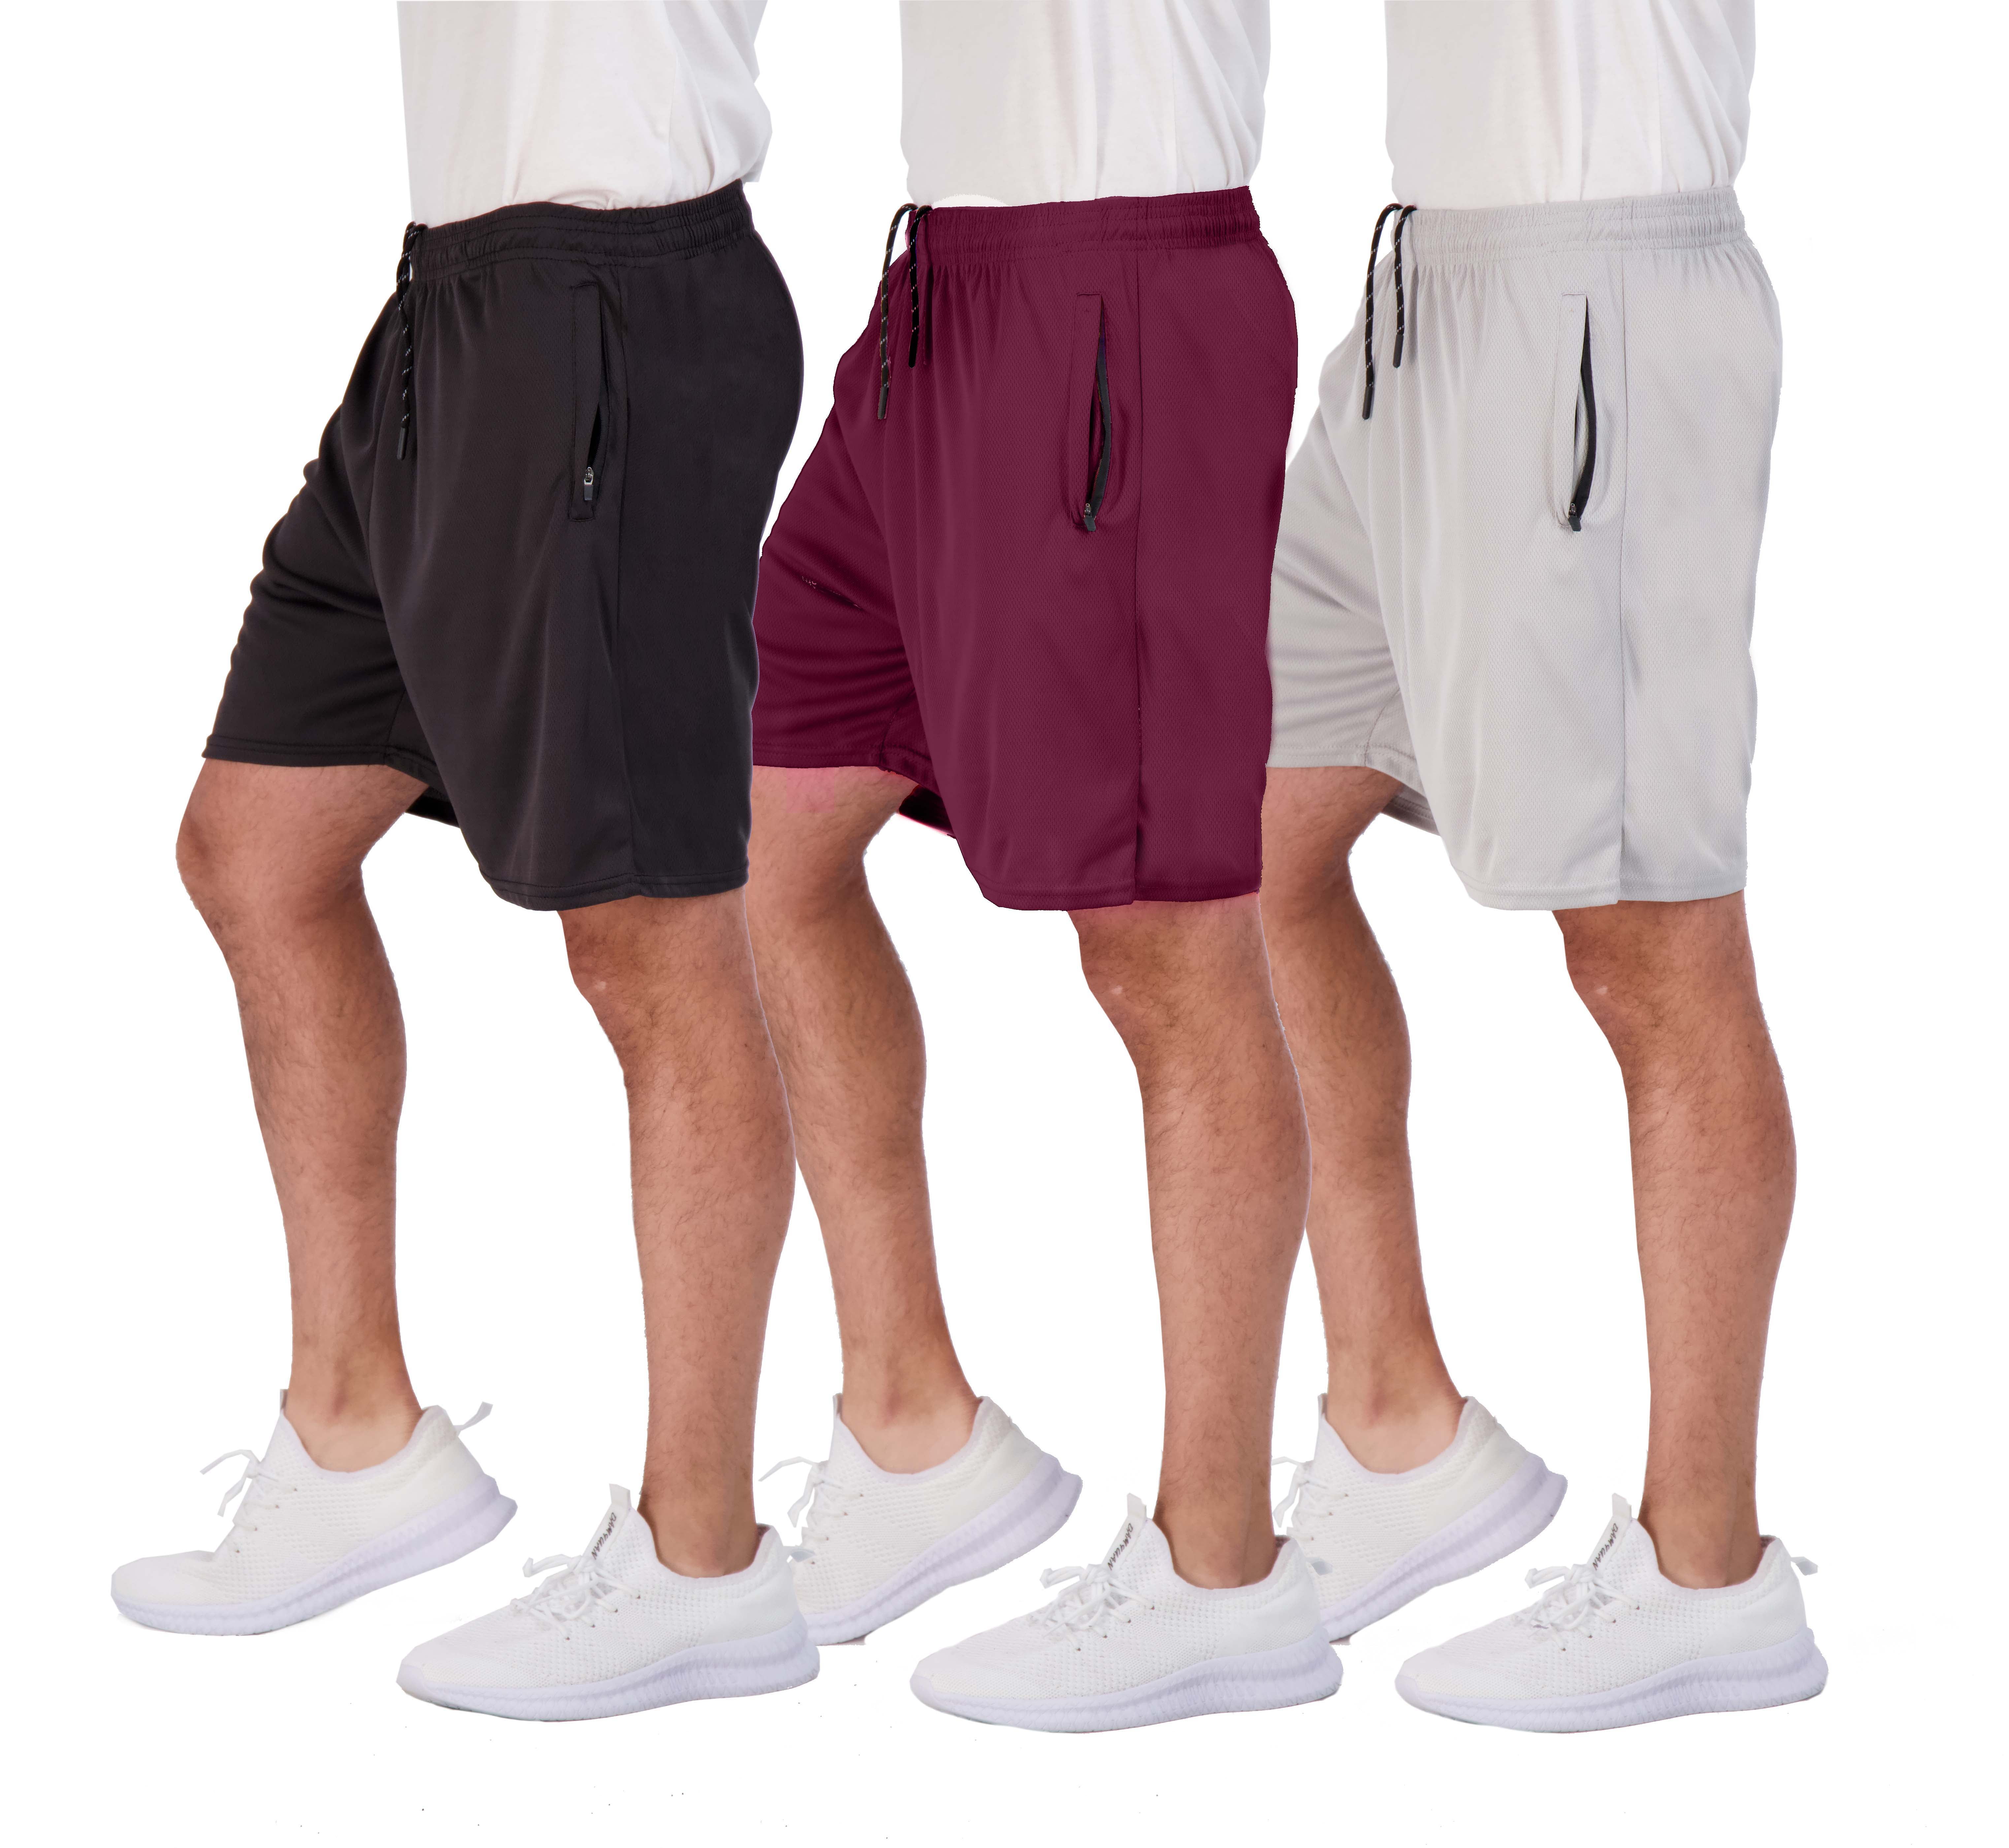 NELEUS Men's 7 Mesh Running Workout Shorts with Pockets 